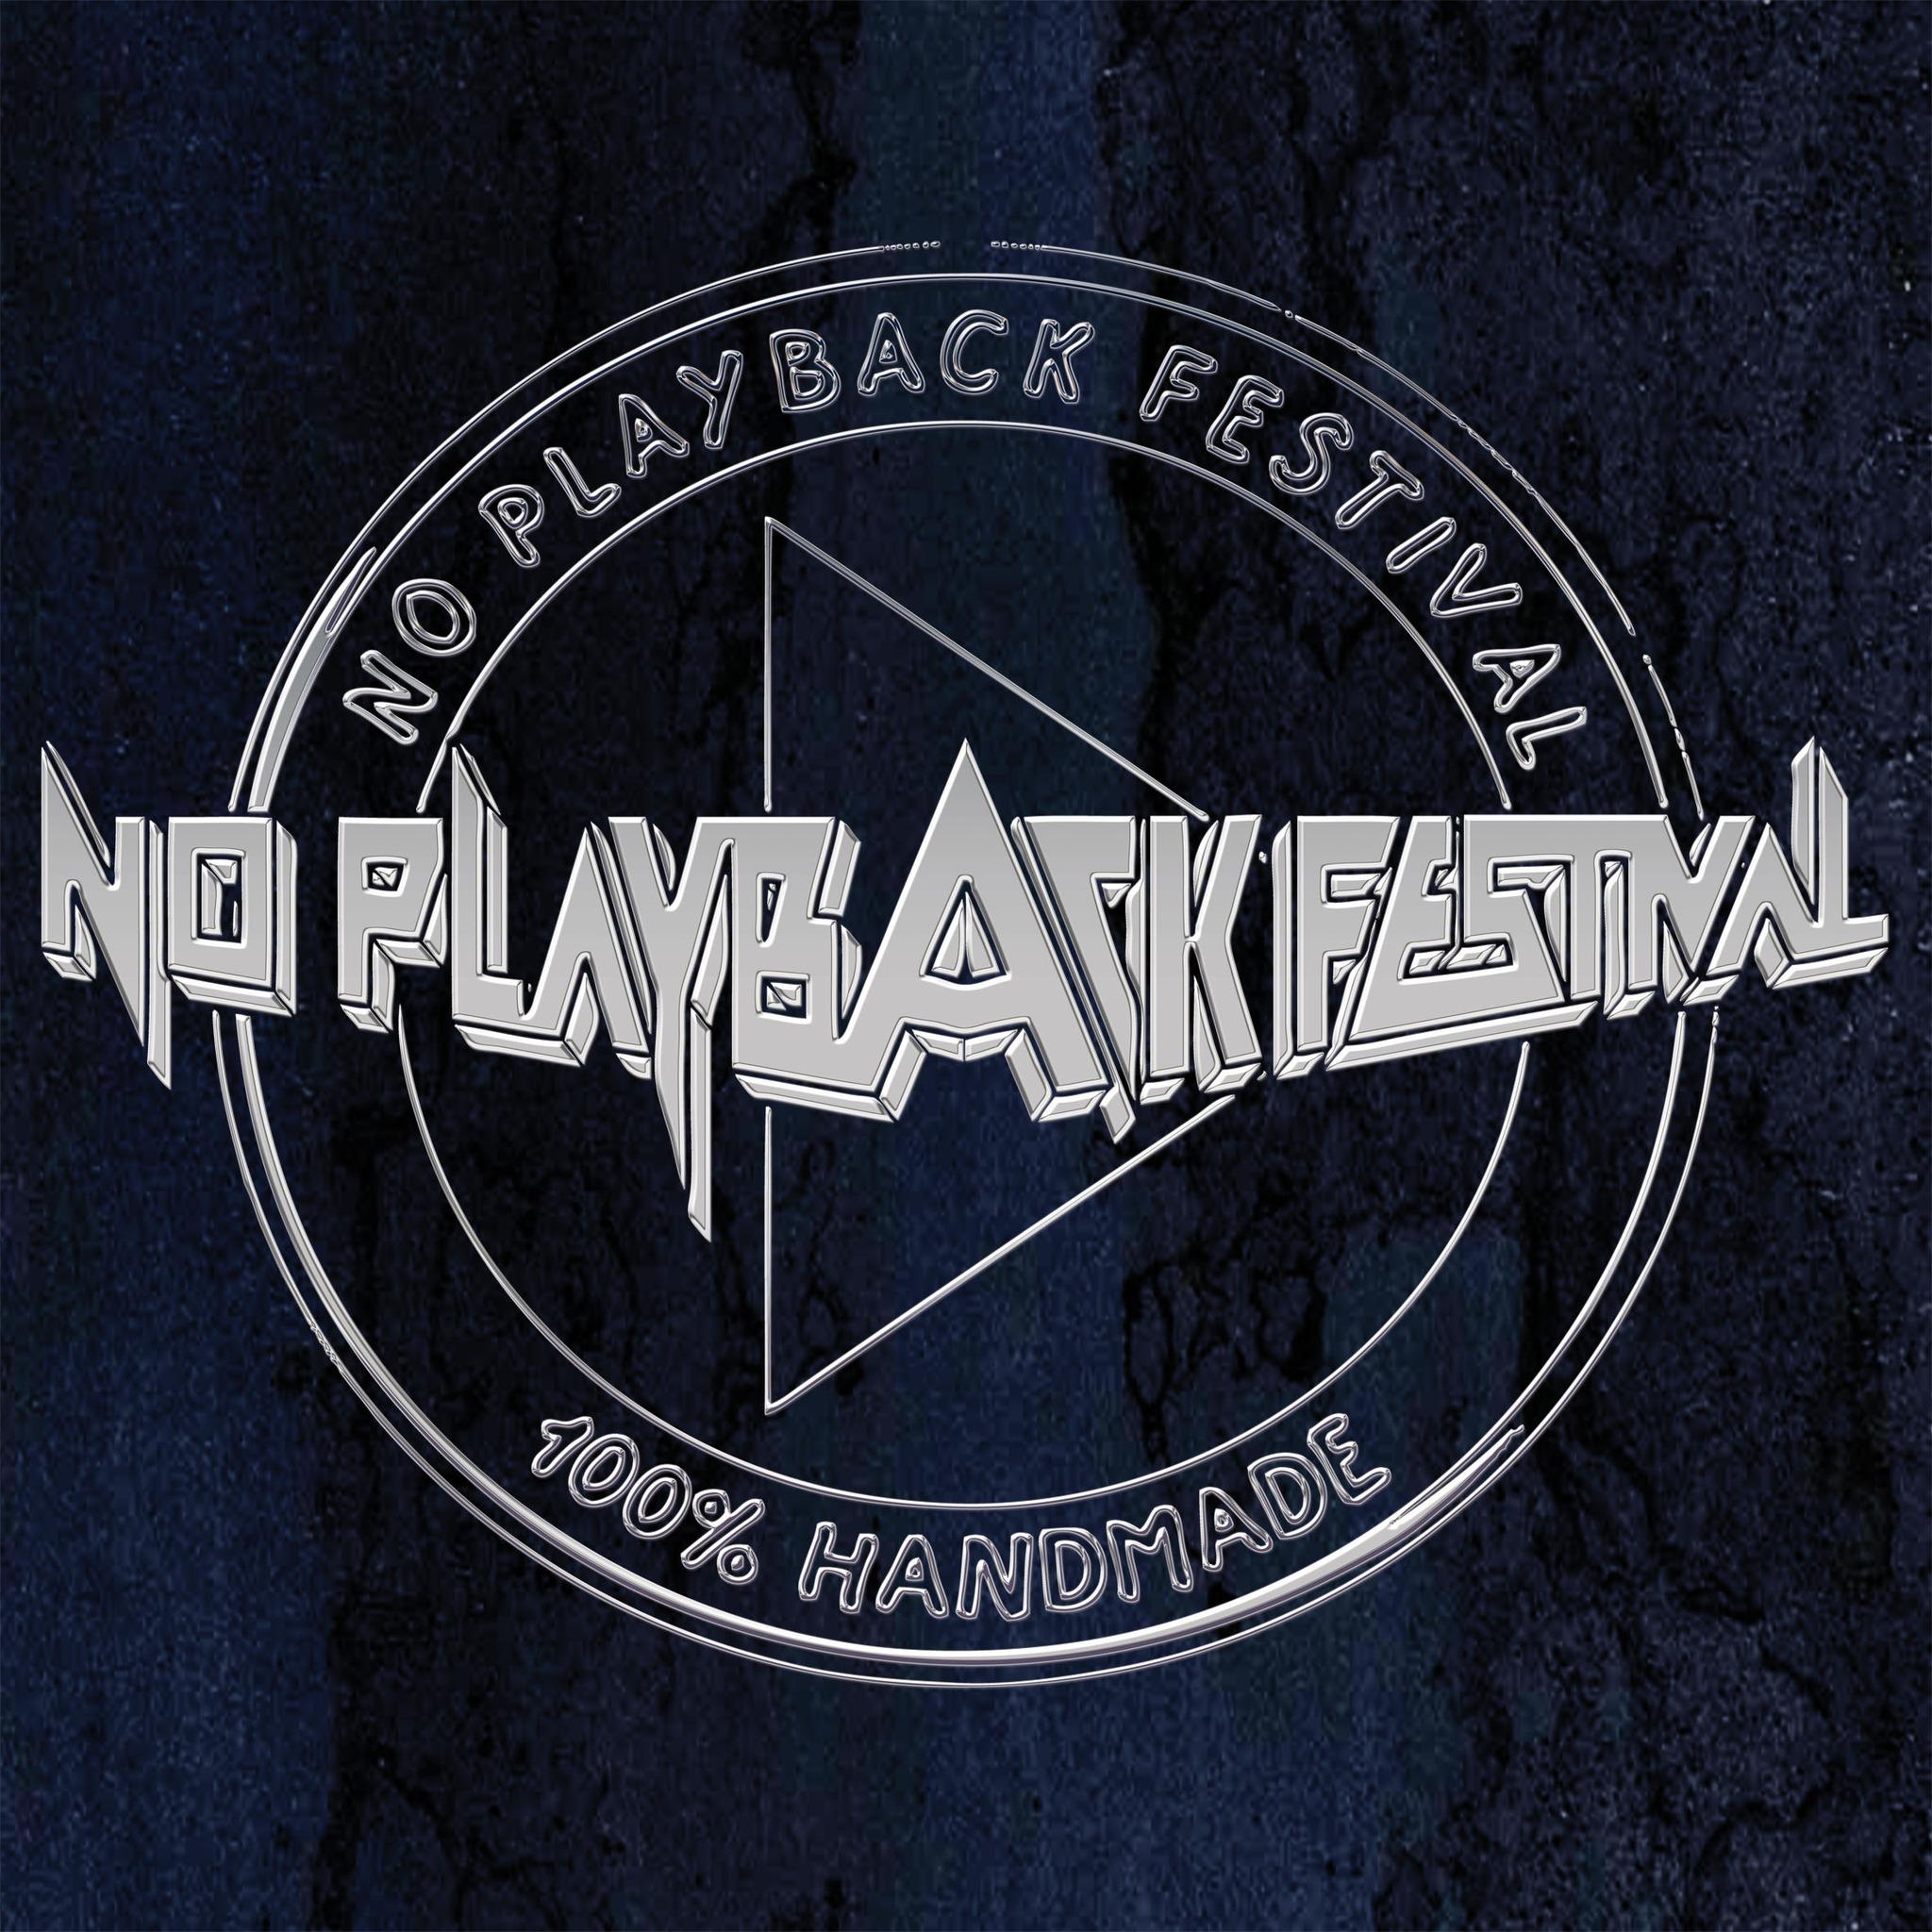 No Playback Festival